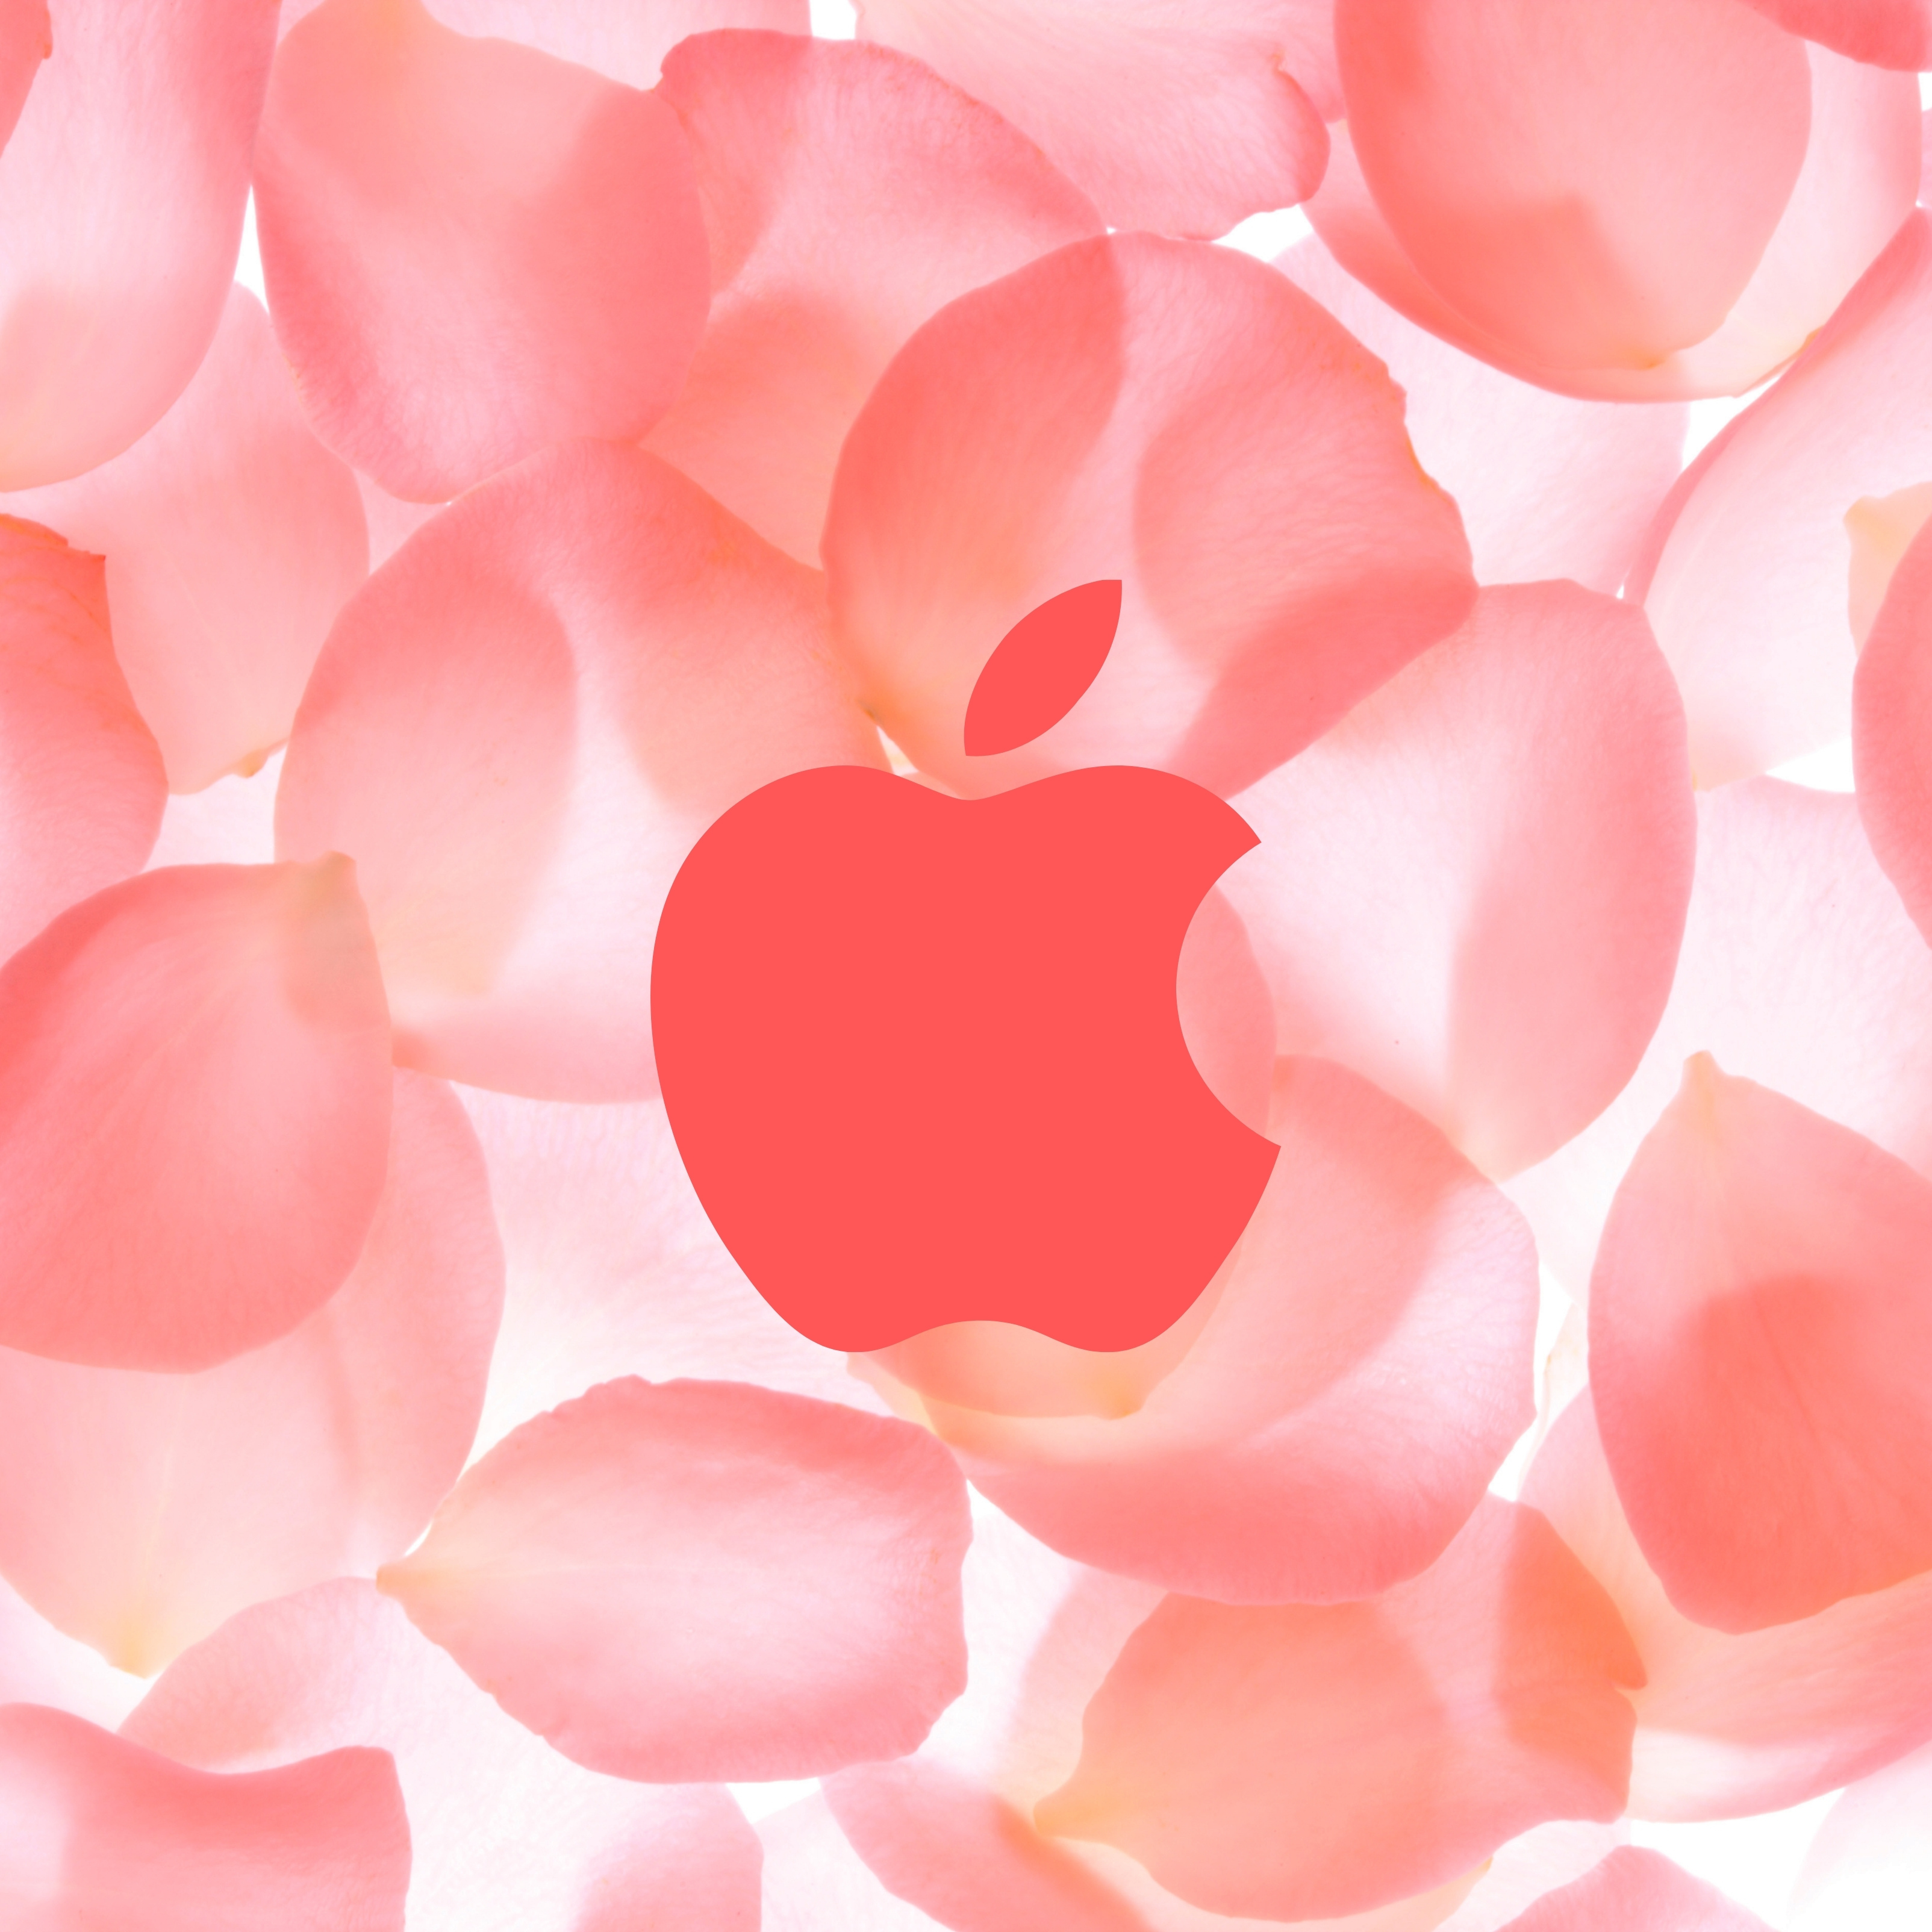 Apple Logo Iphone Macos Beautiful Flower Background iPad Wallpaper